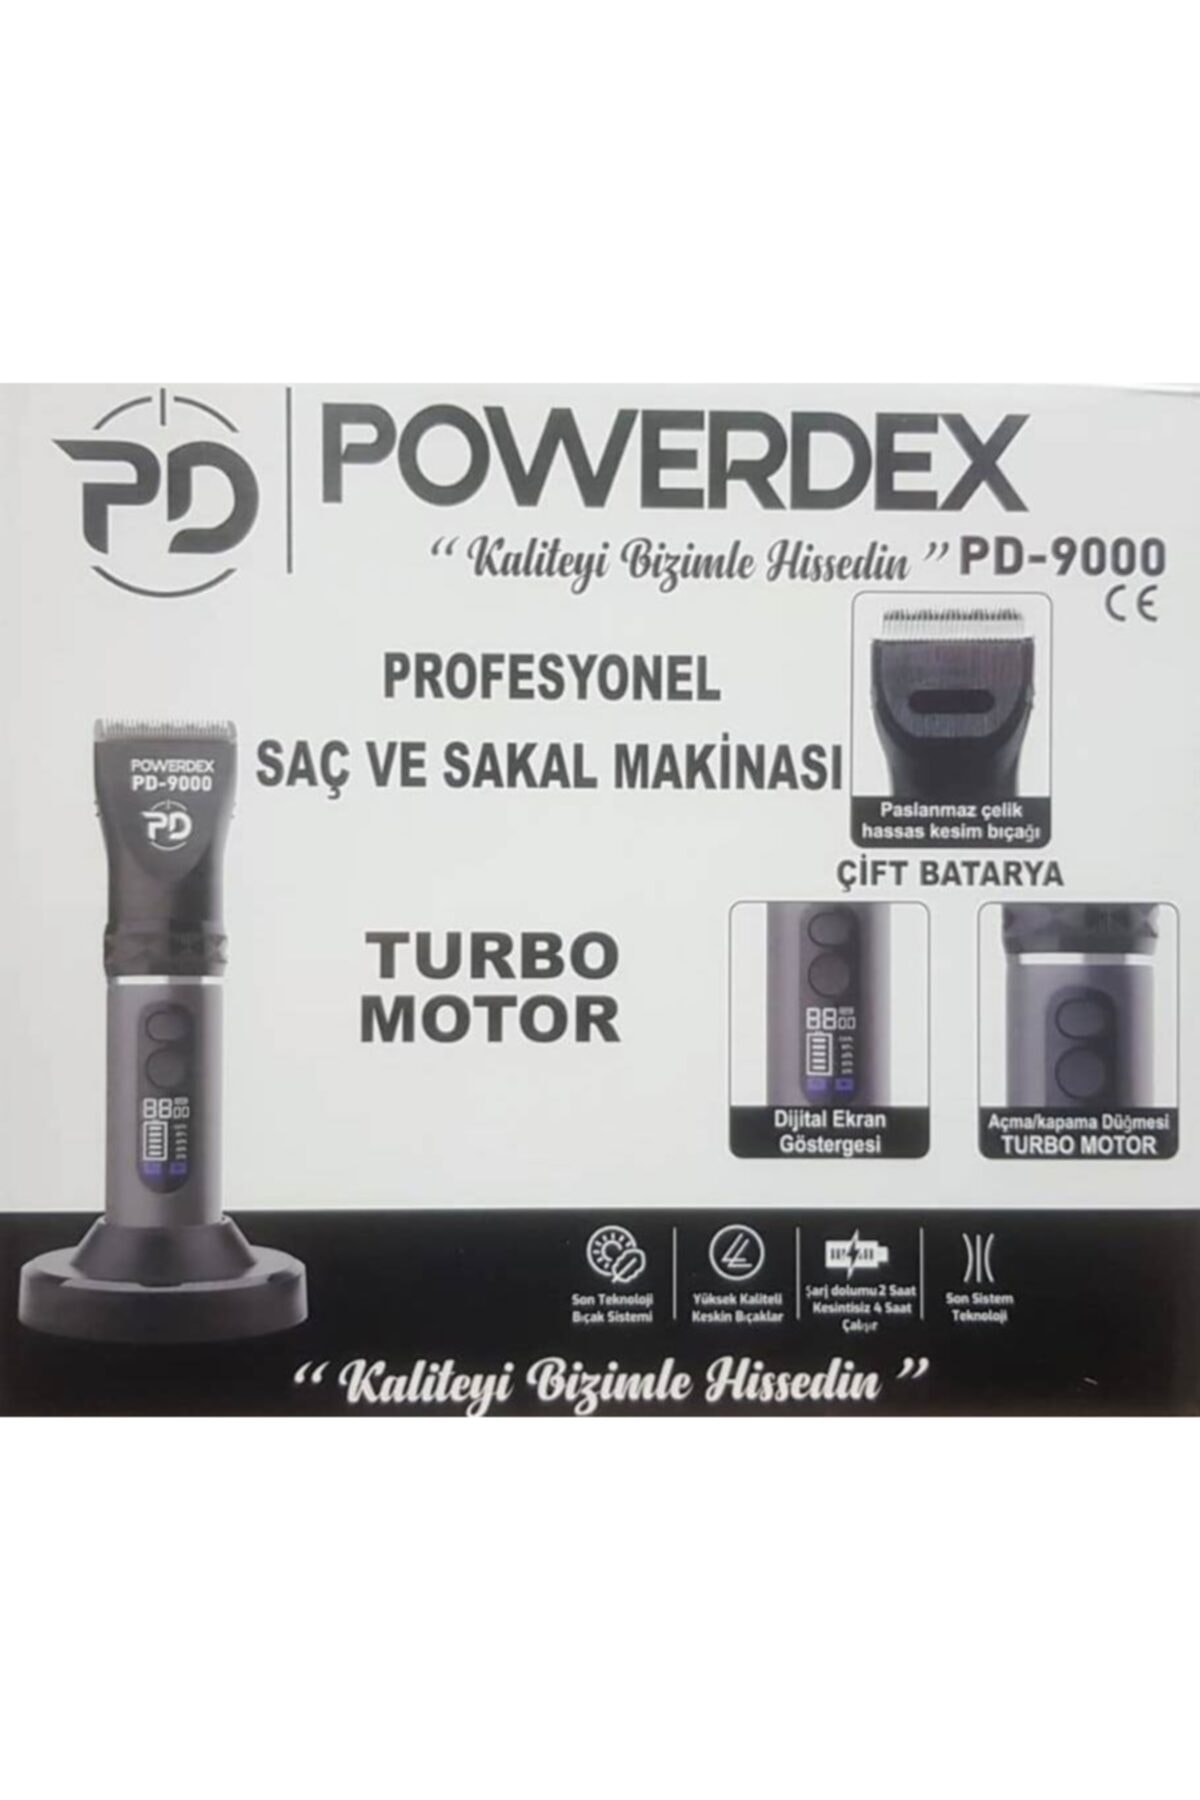 powerdex Erkek Saç Sakal Makinası Pd 9000